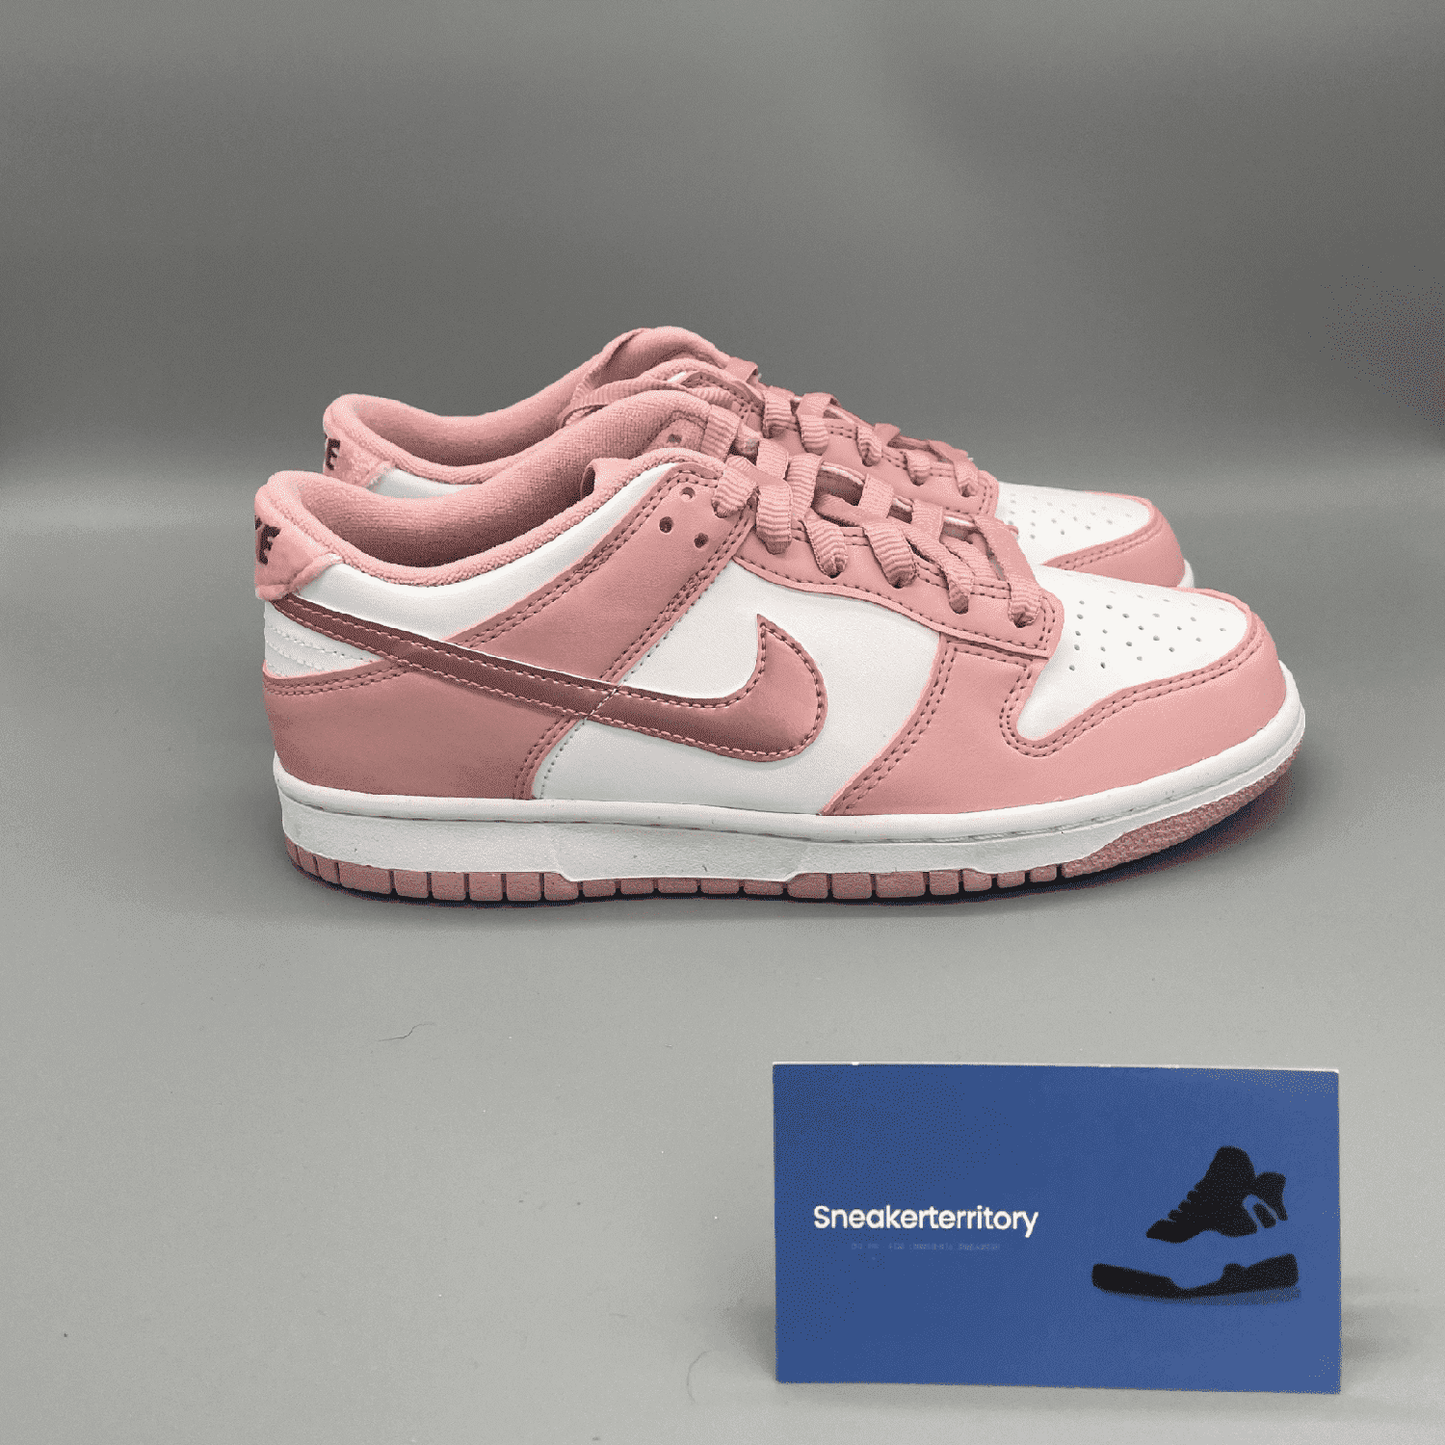 Nike Dunk Low Pink Velvet (GS) - Sneakerterritory; Sneaker Territory 4